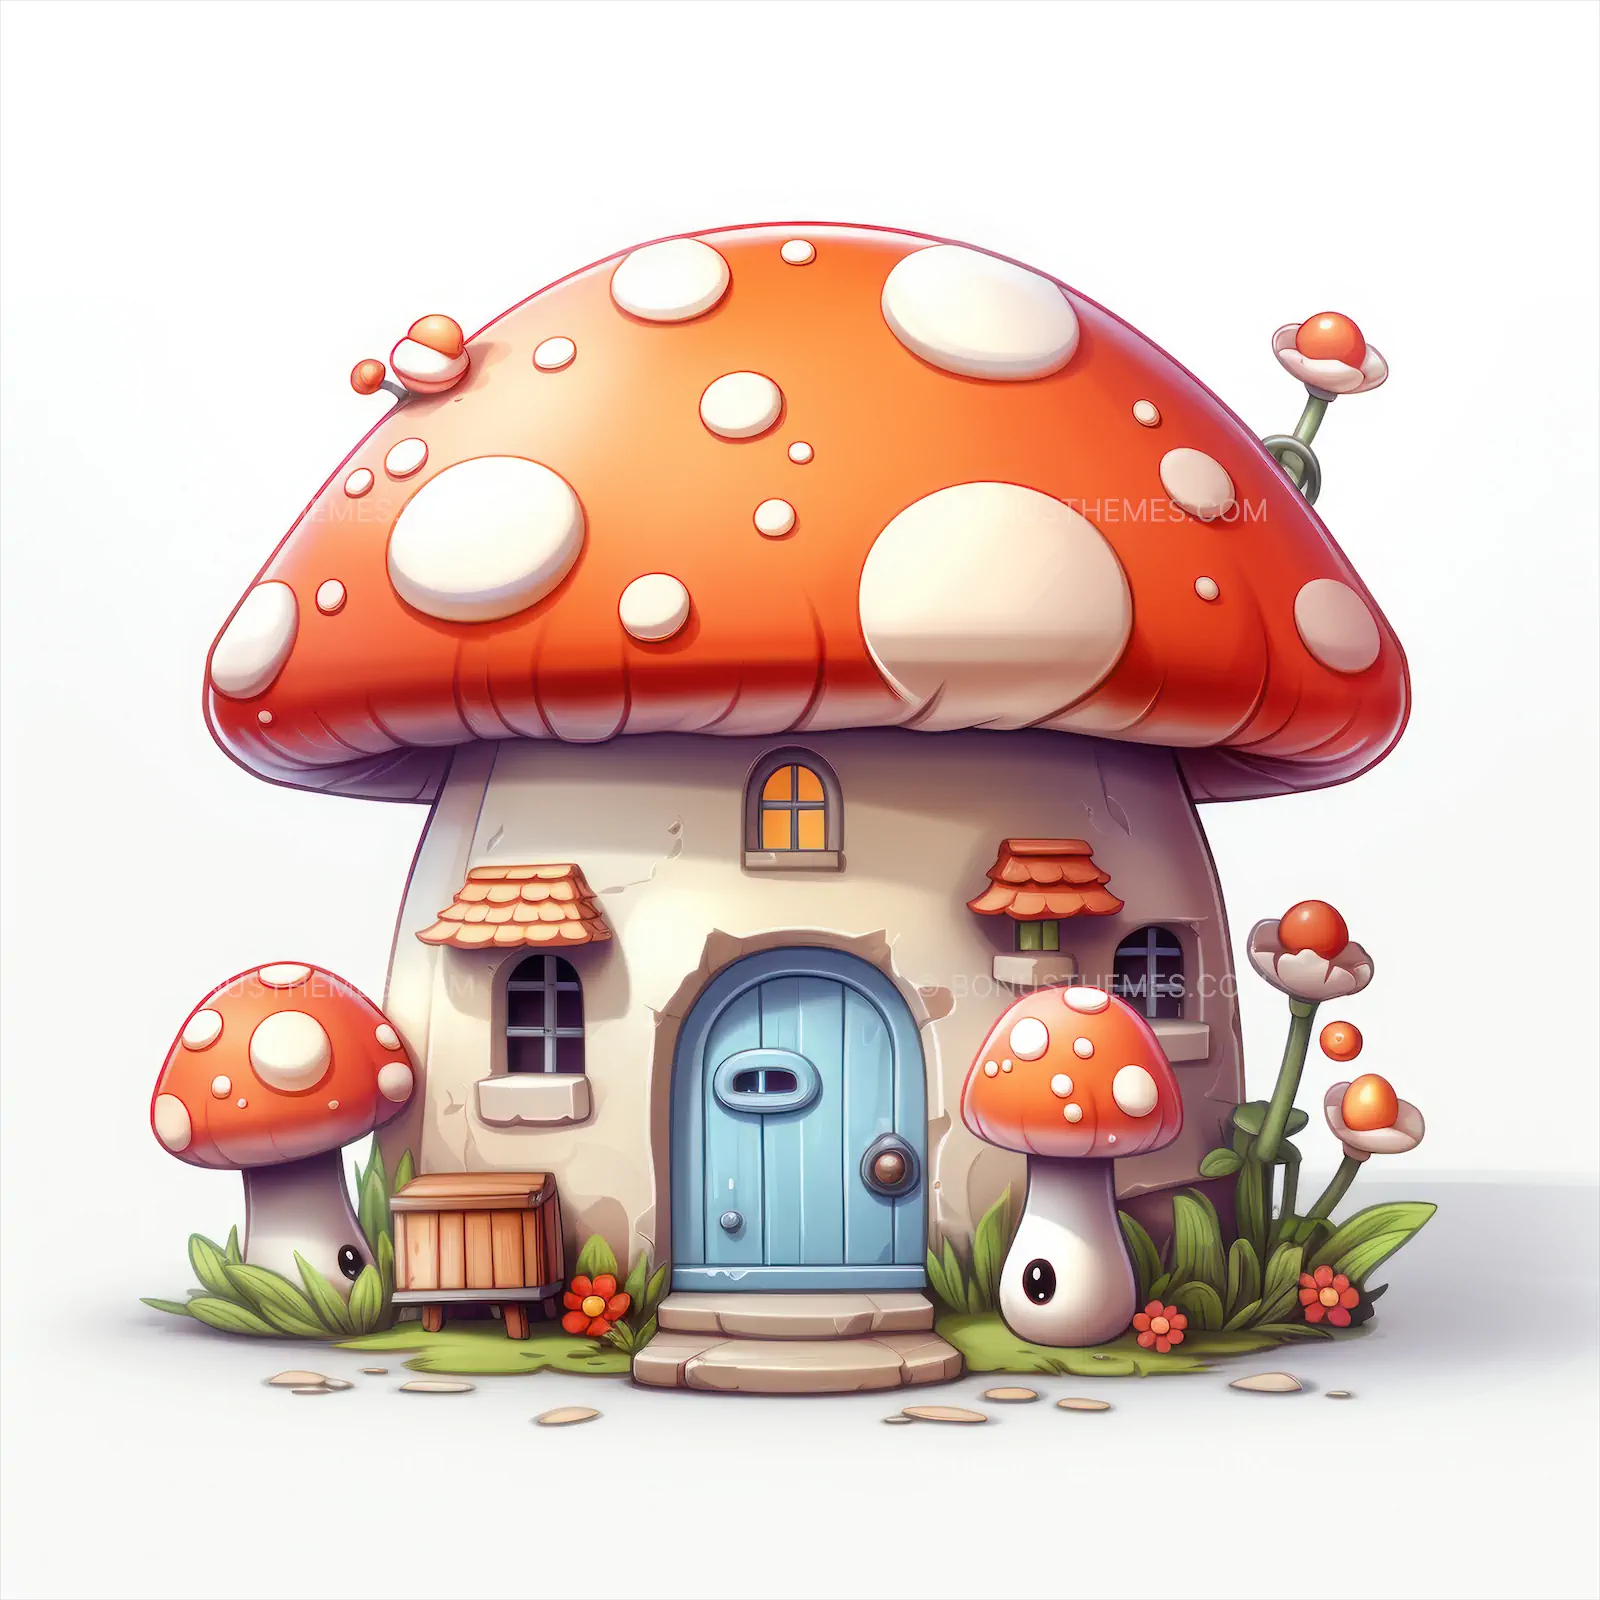 A cute mushroom home